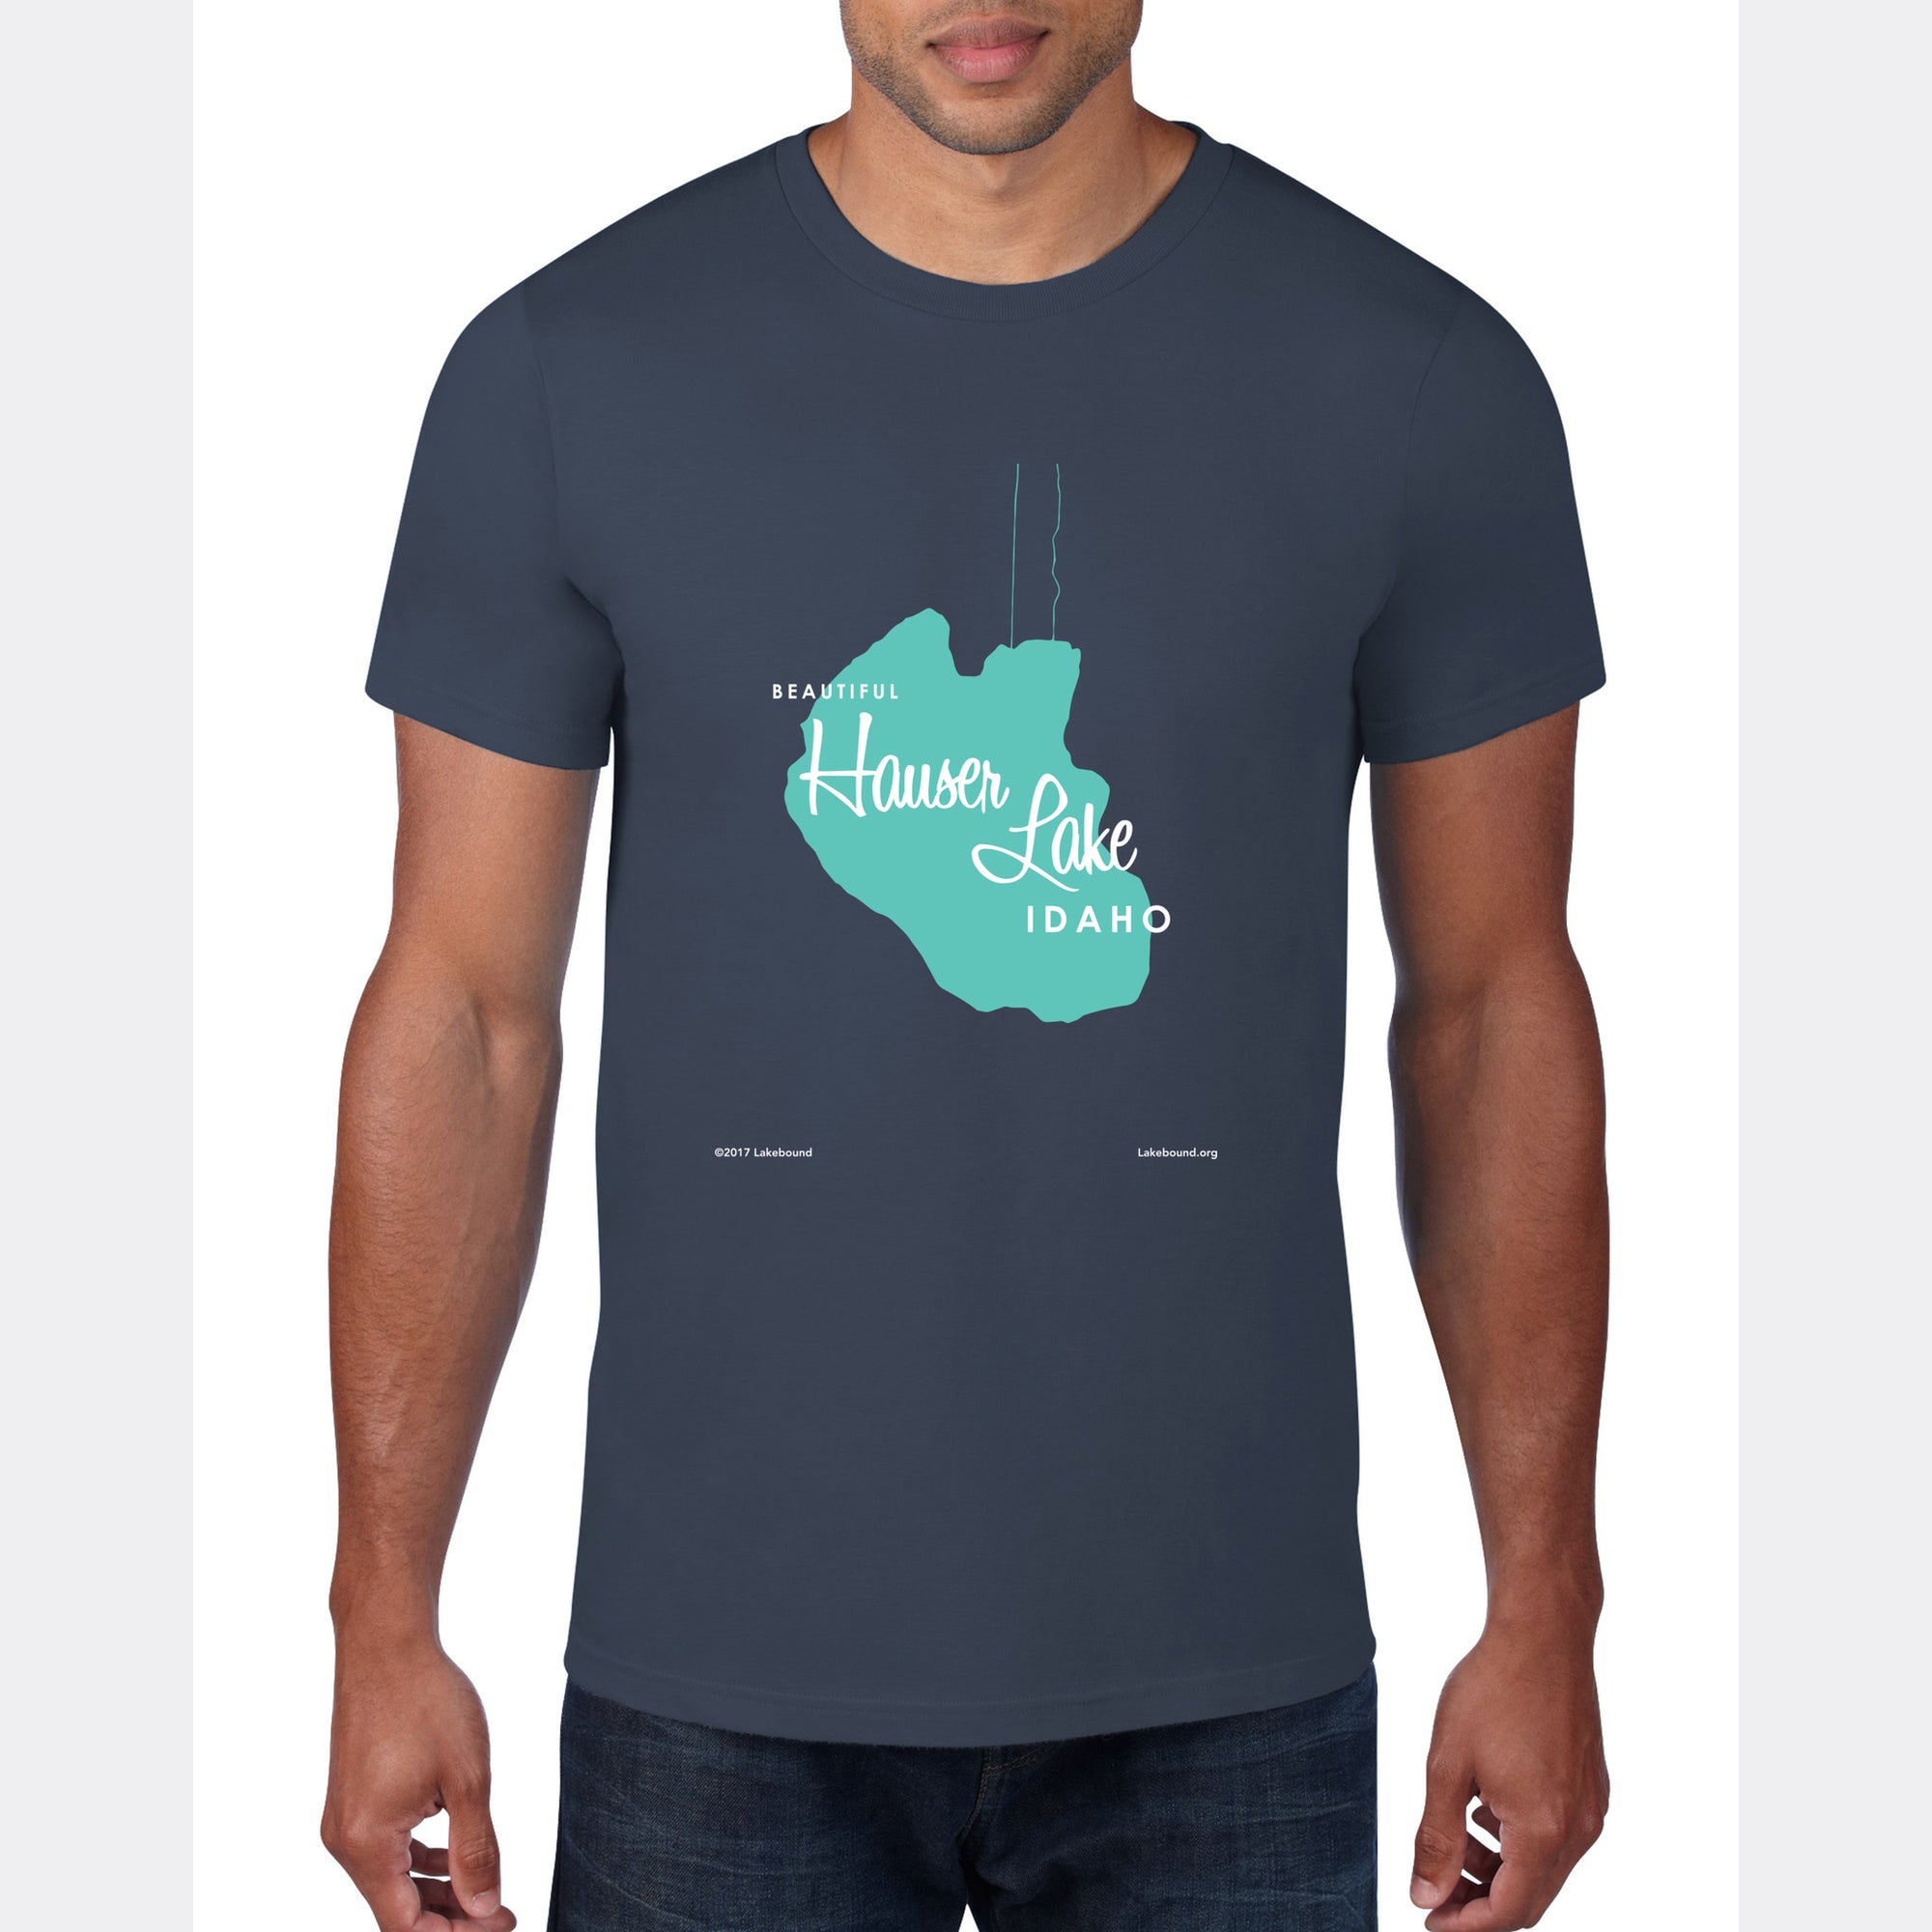 Hauser Lake Idaho, T-Shirt